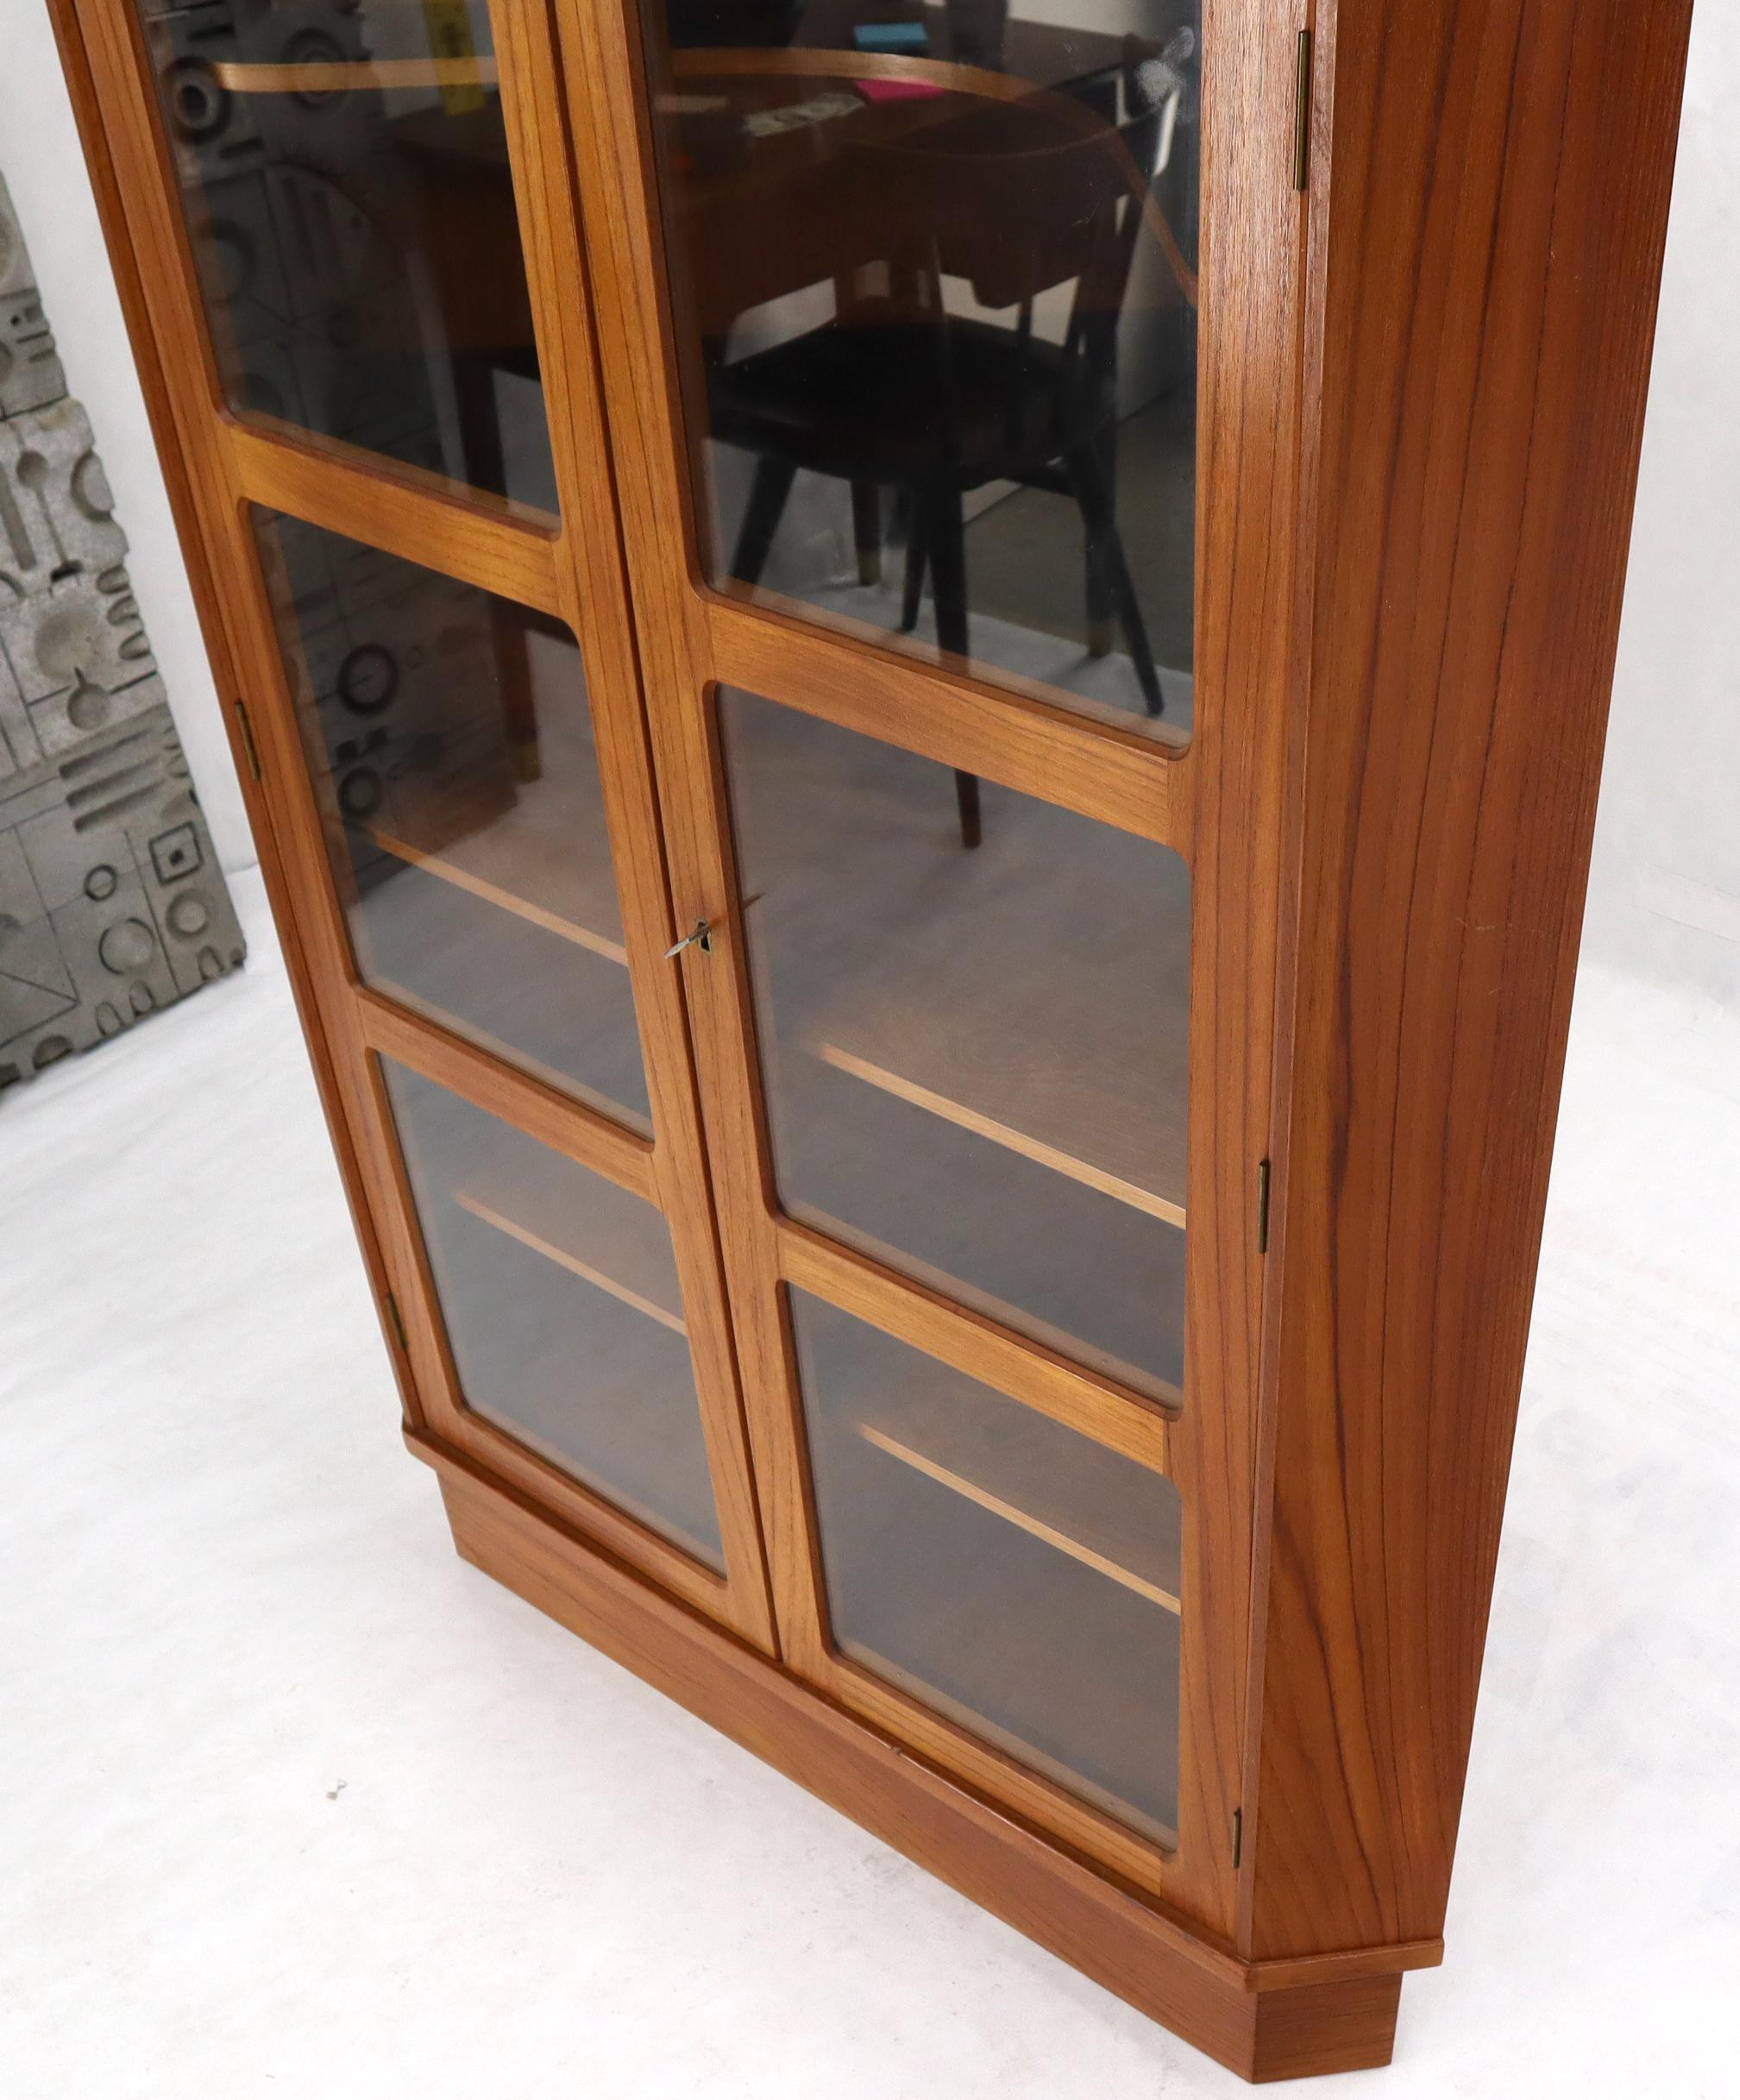 Super clean midcentury Danish Modern teak corner cabinet with adjustable shelves.